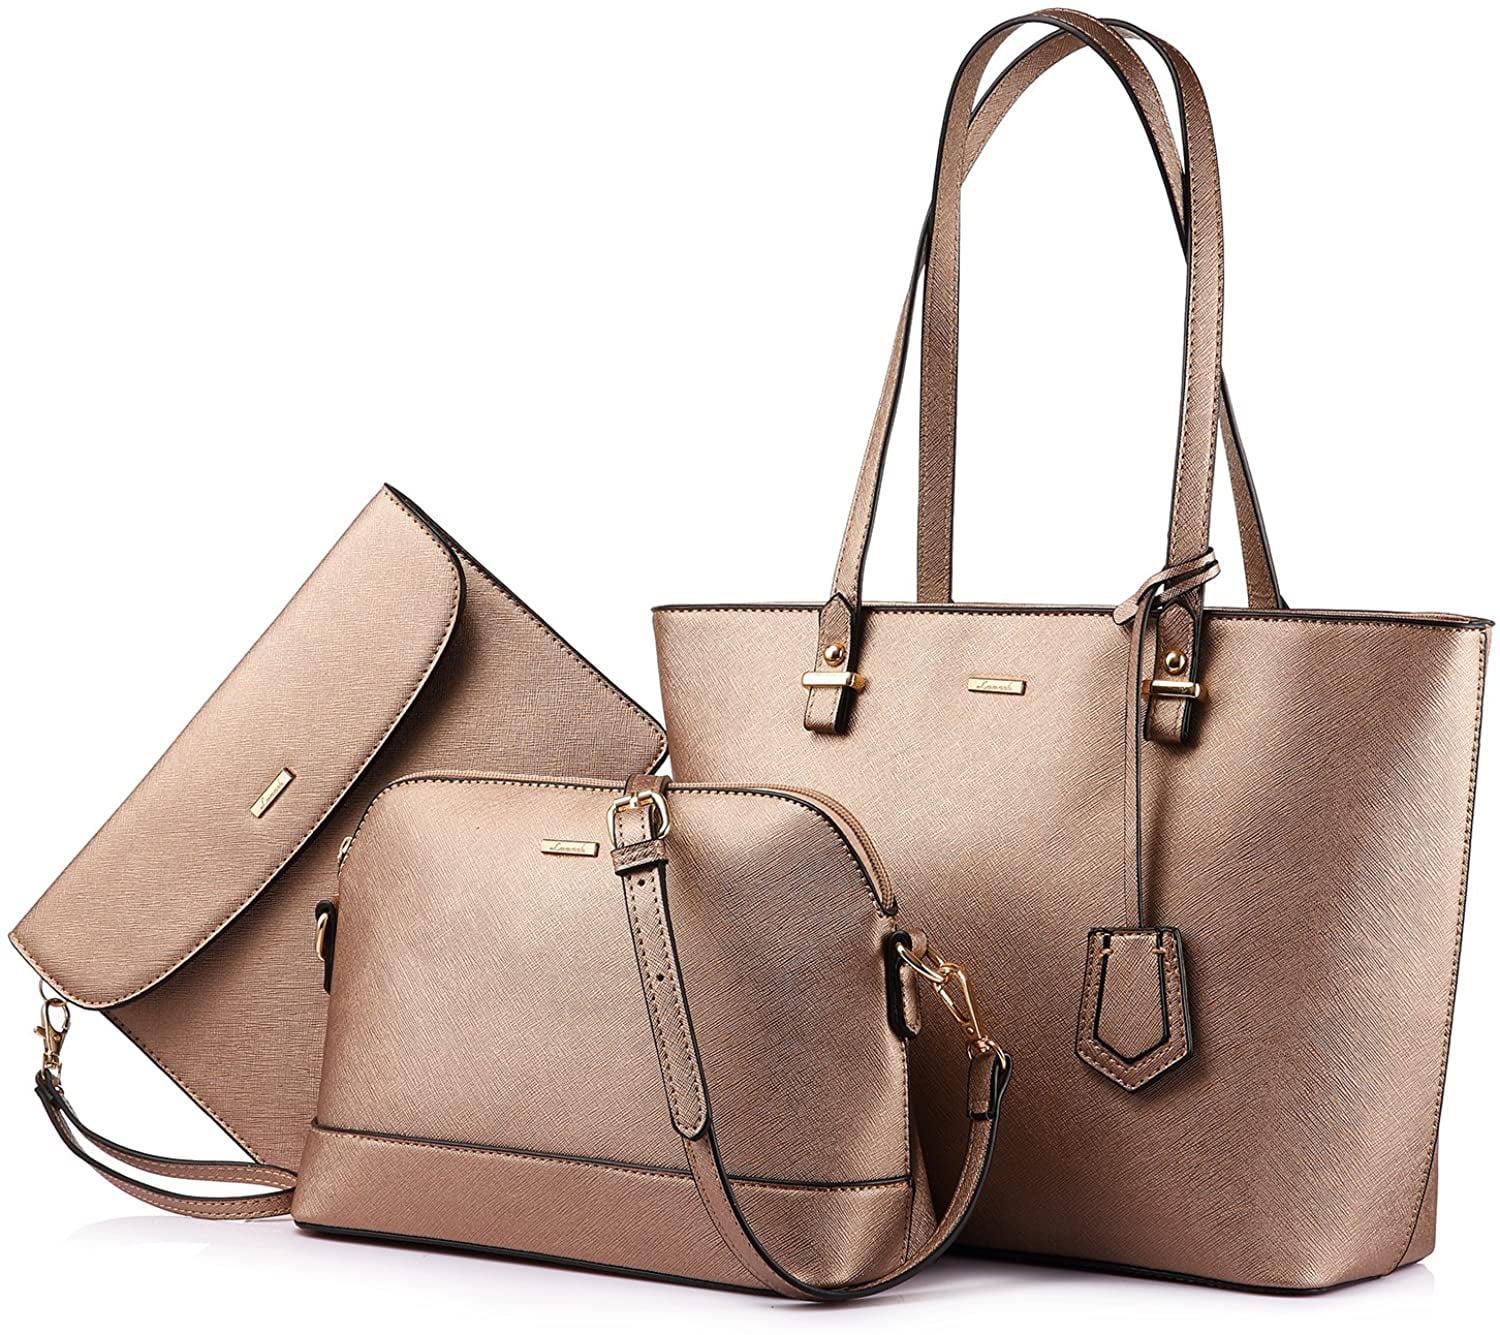 Purses for Women Fashion Handbags Tote Bag Shoulder Bags Top Handle Satchel Purse Set 3pcs 